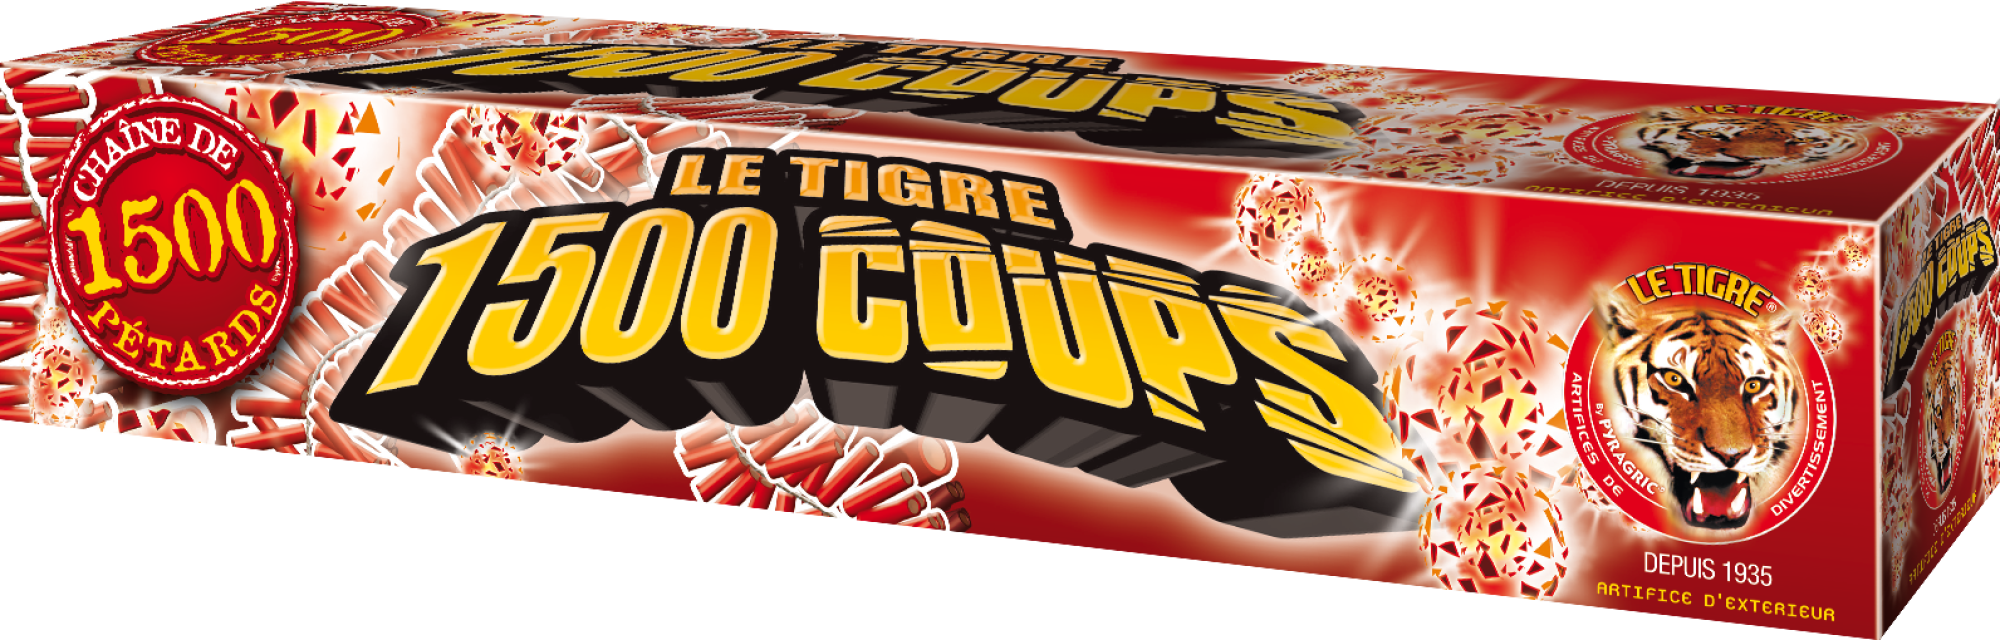 Pétards - Le Tigre 1500 Coups